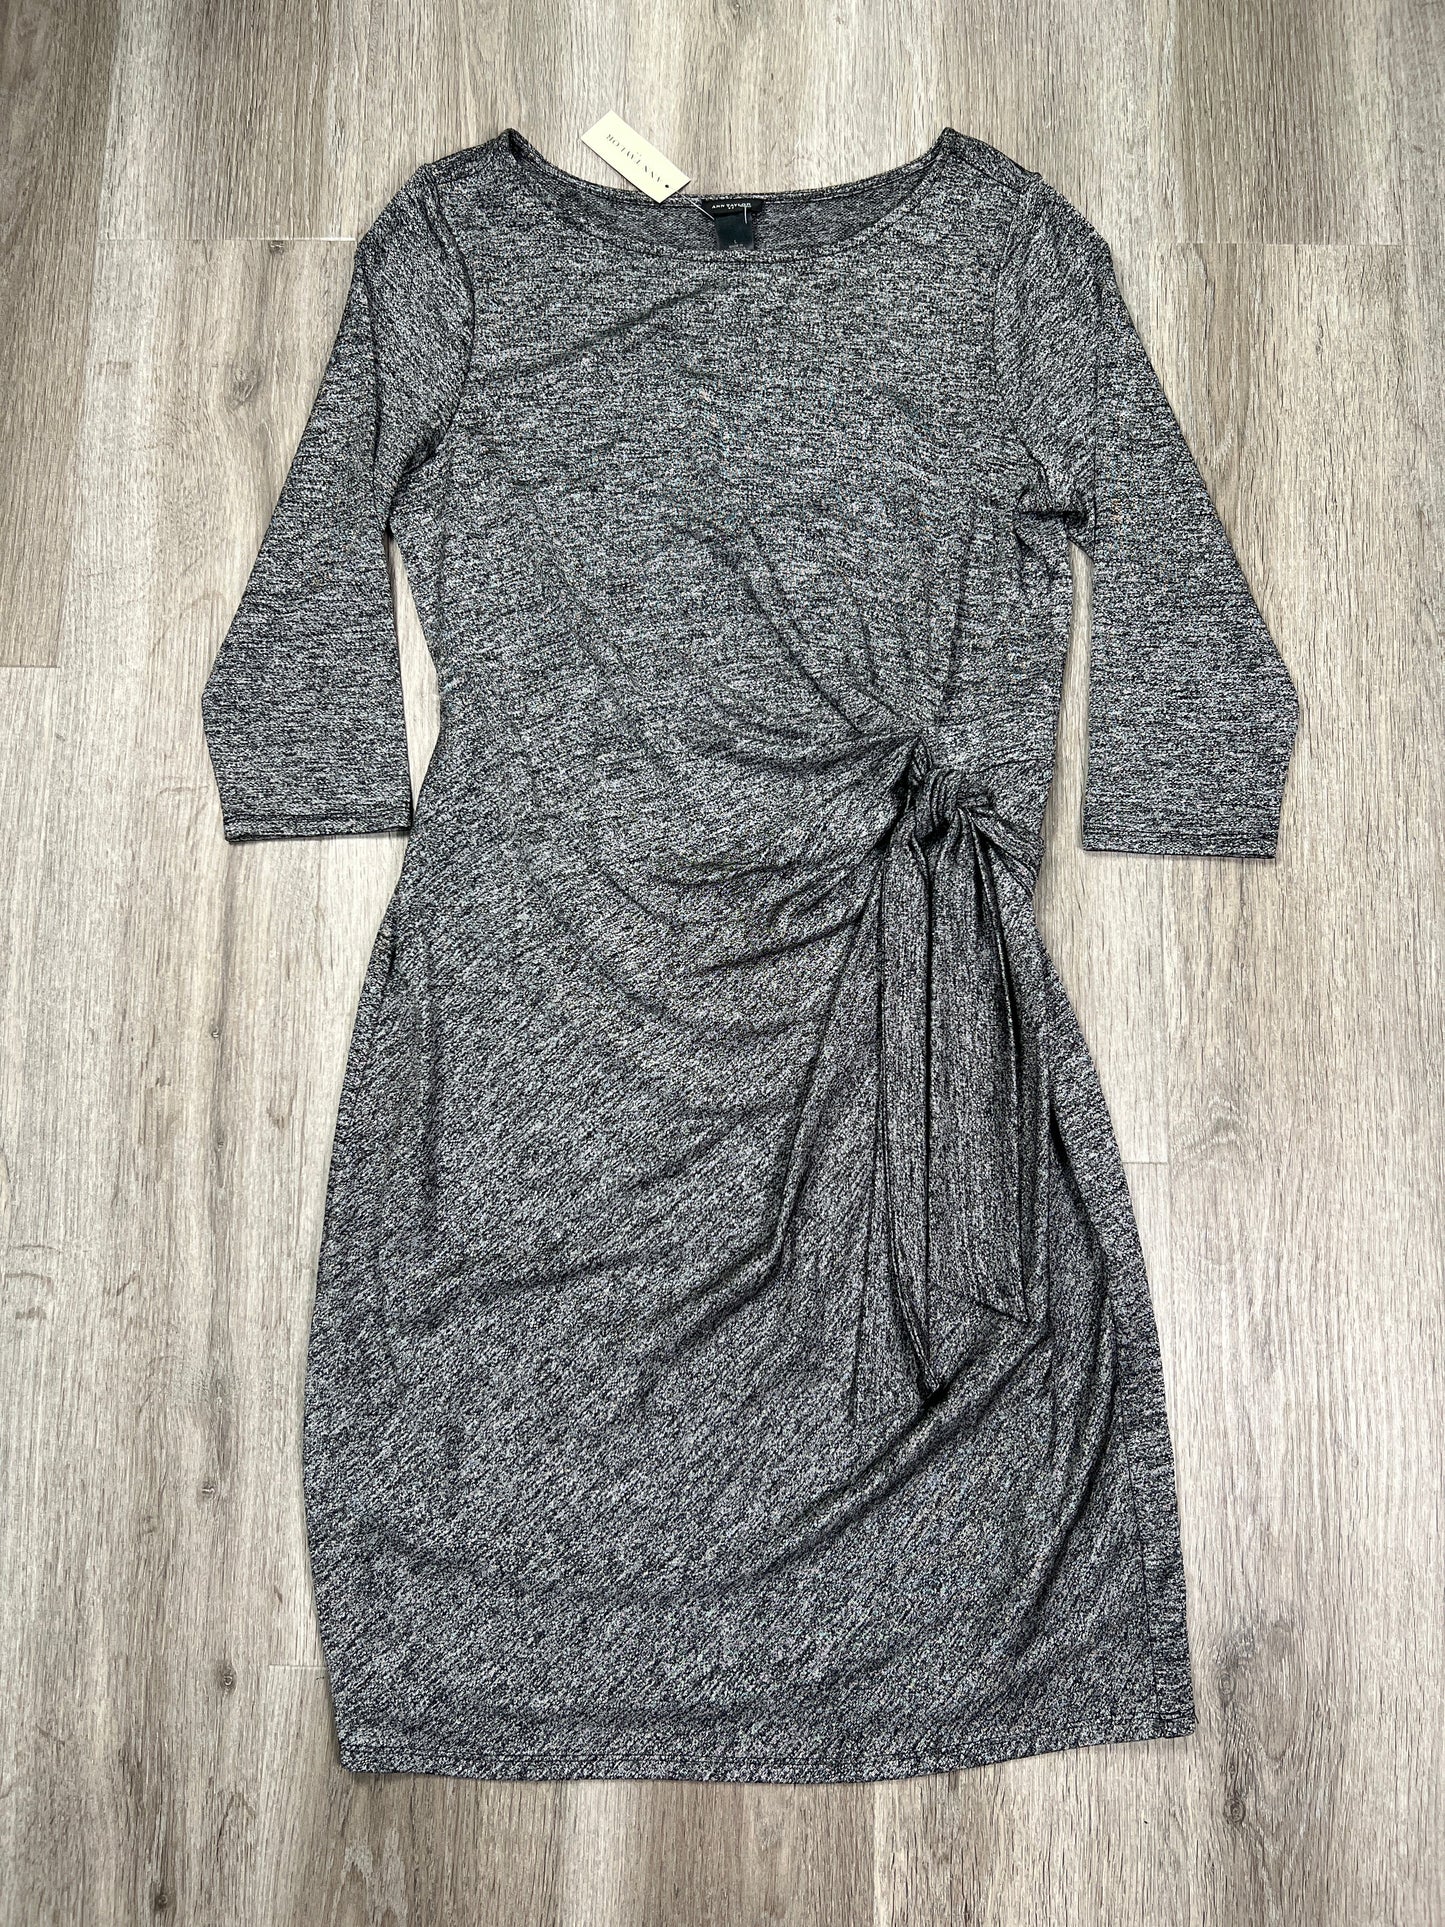 Grey Dress Casual Short Ann Taylor, Size L